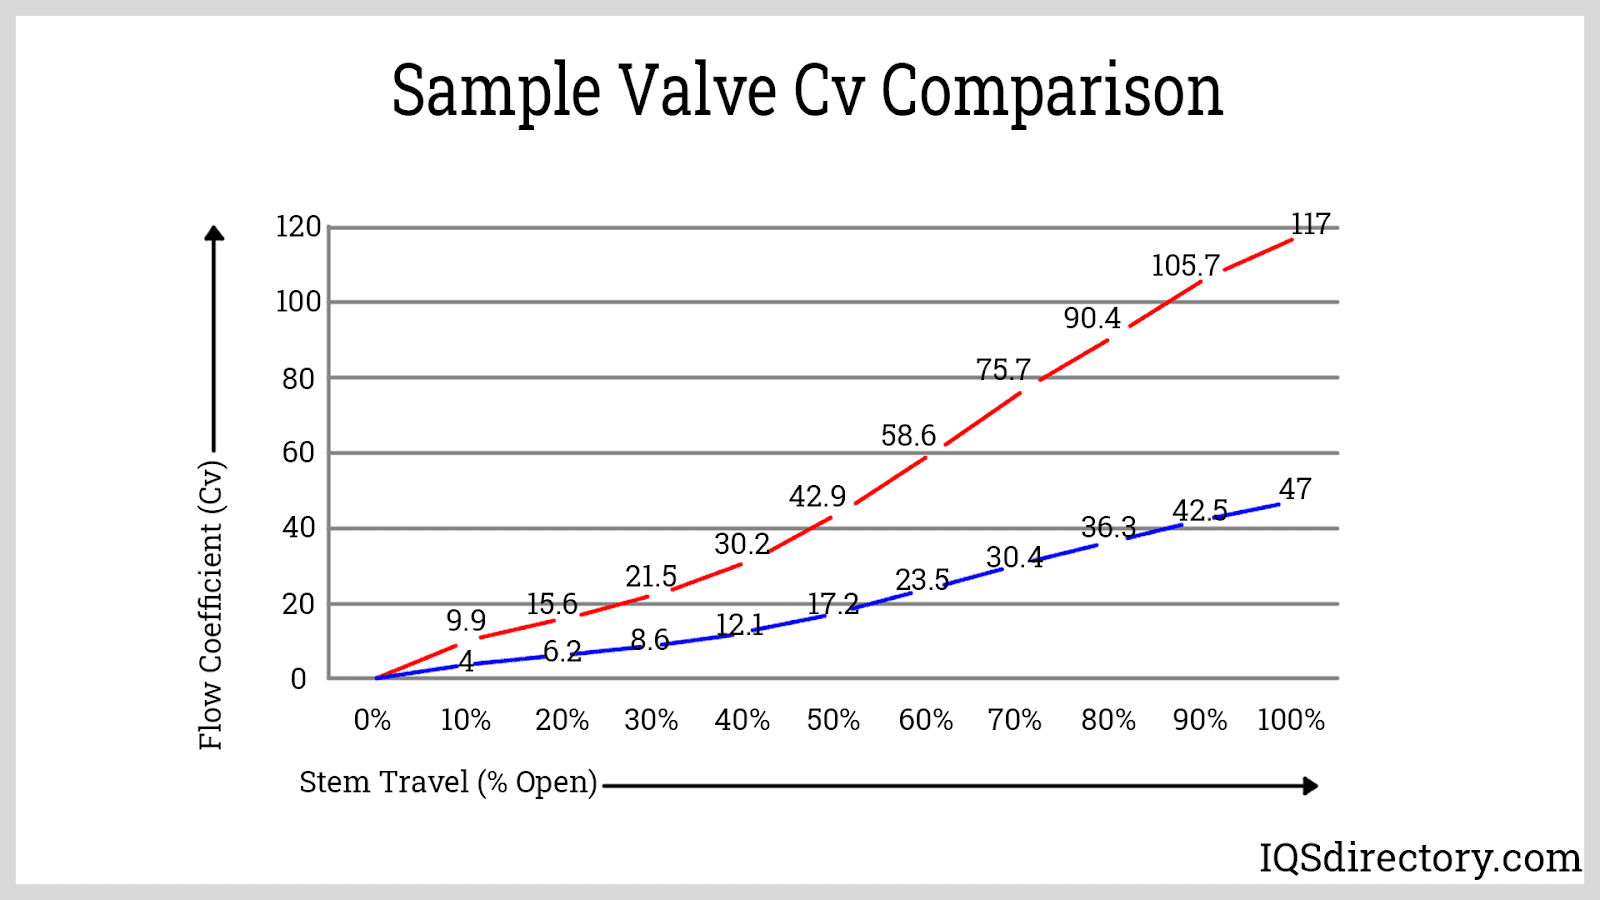 Sample Valve CV Comparison